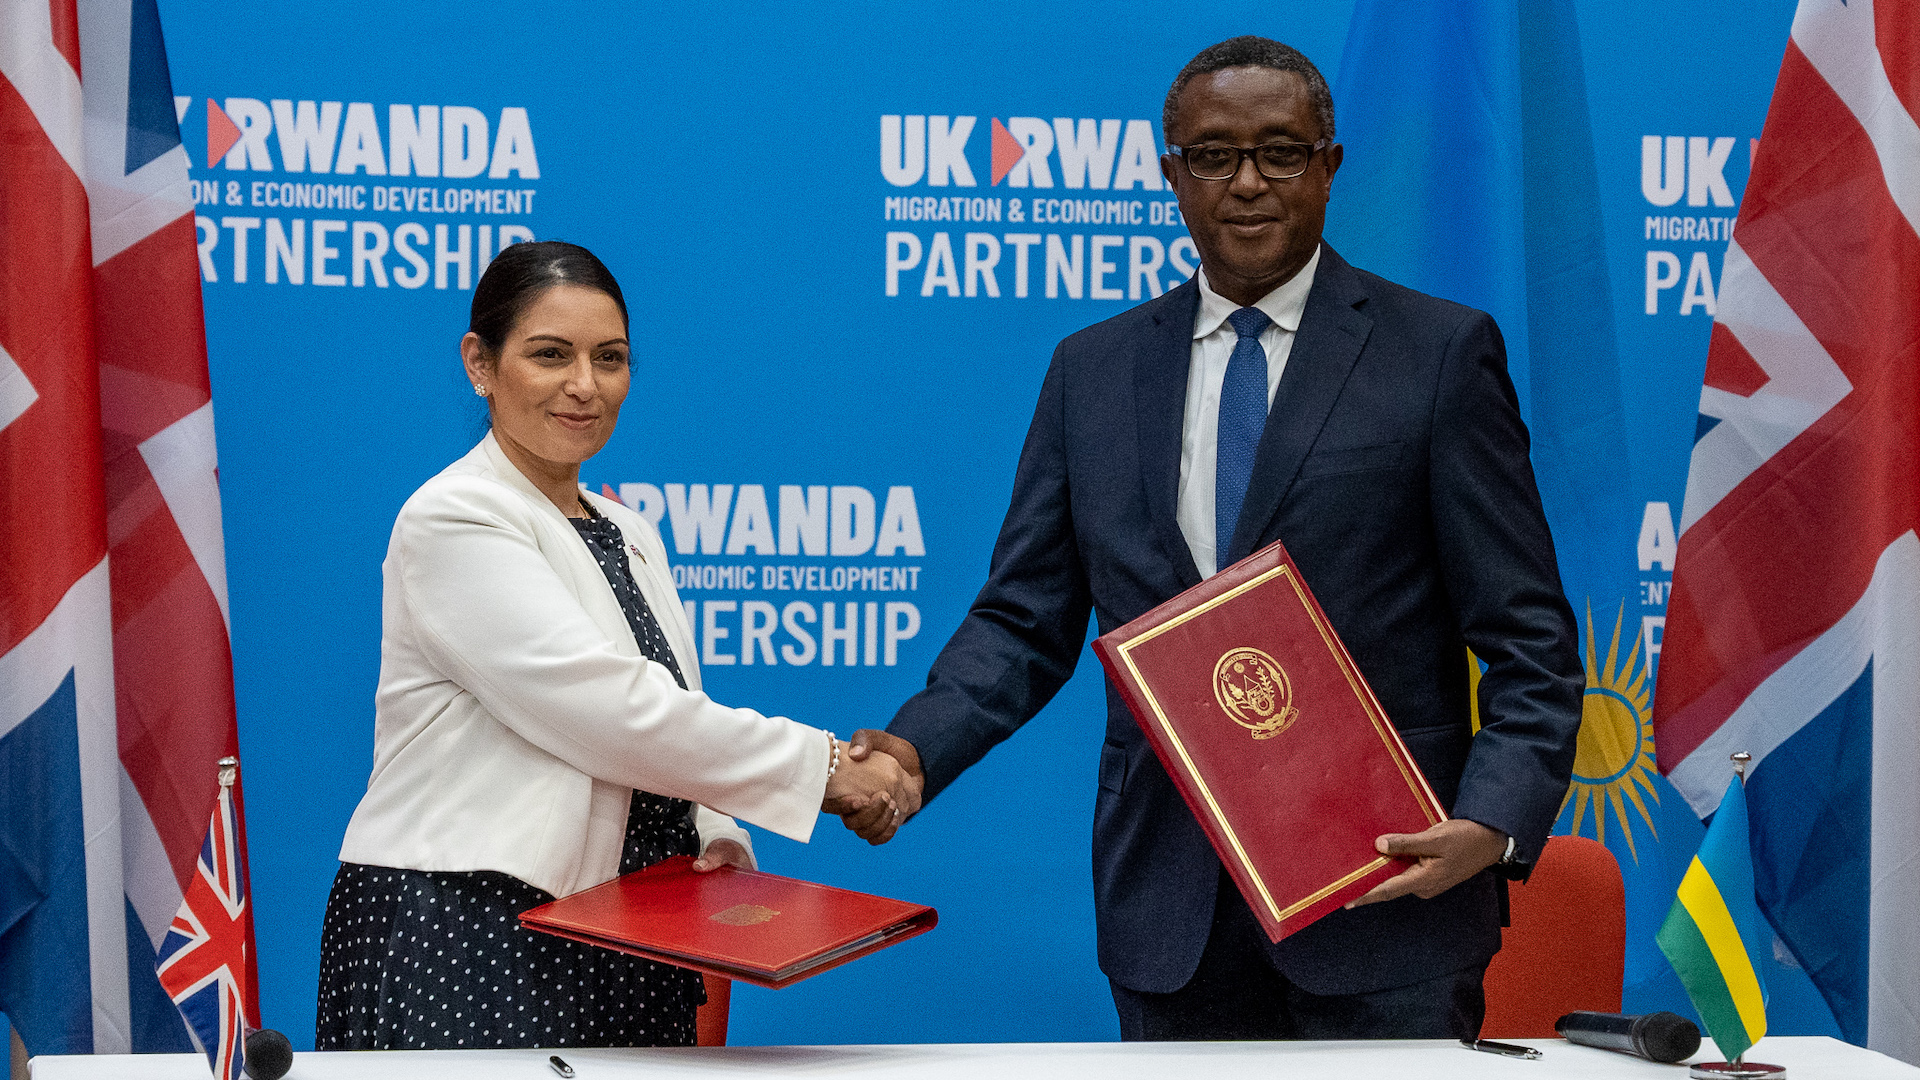 Home Secretary Priti Patel and Minister Biruta sign the migration and economic development partnership between the UK and Rwanda